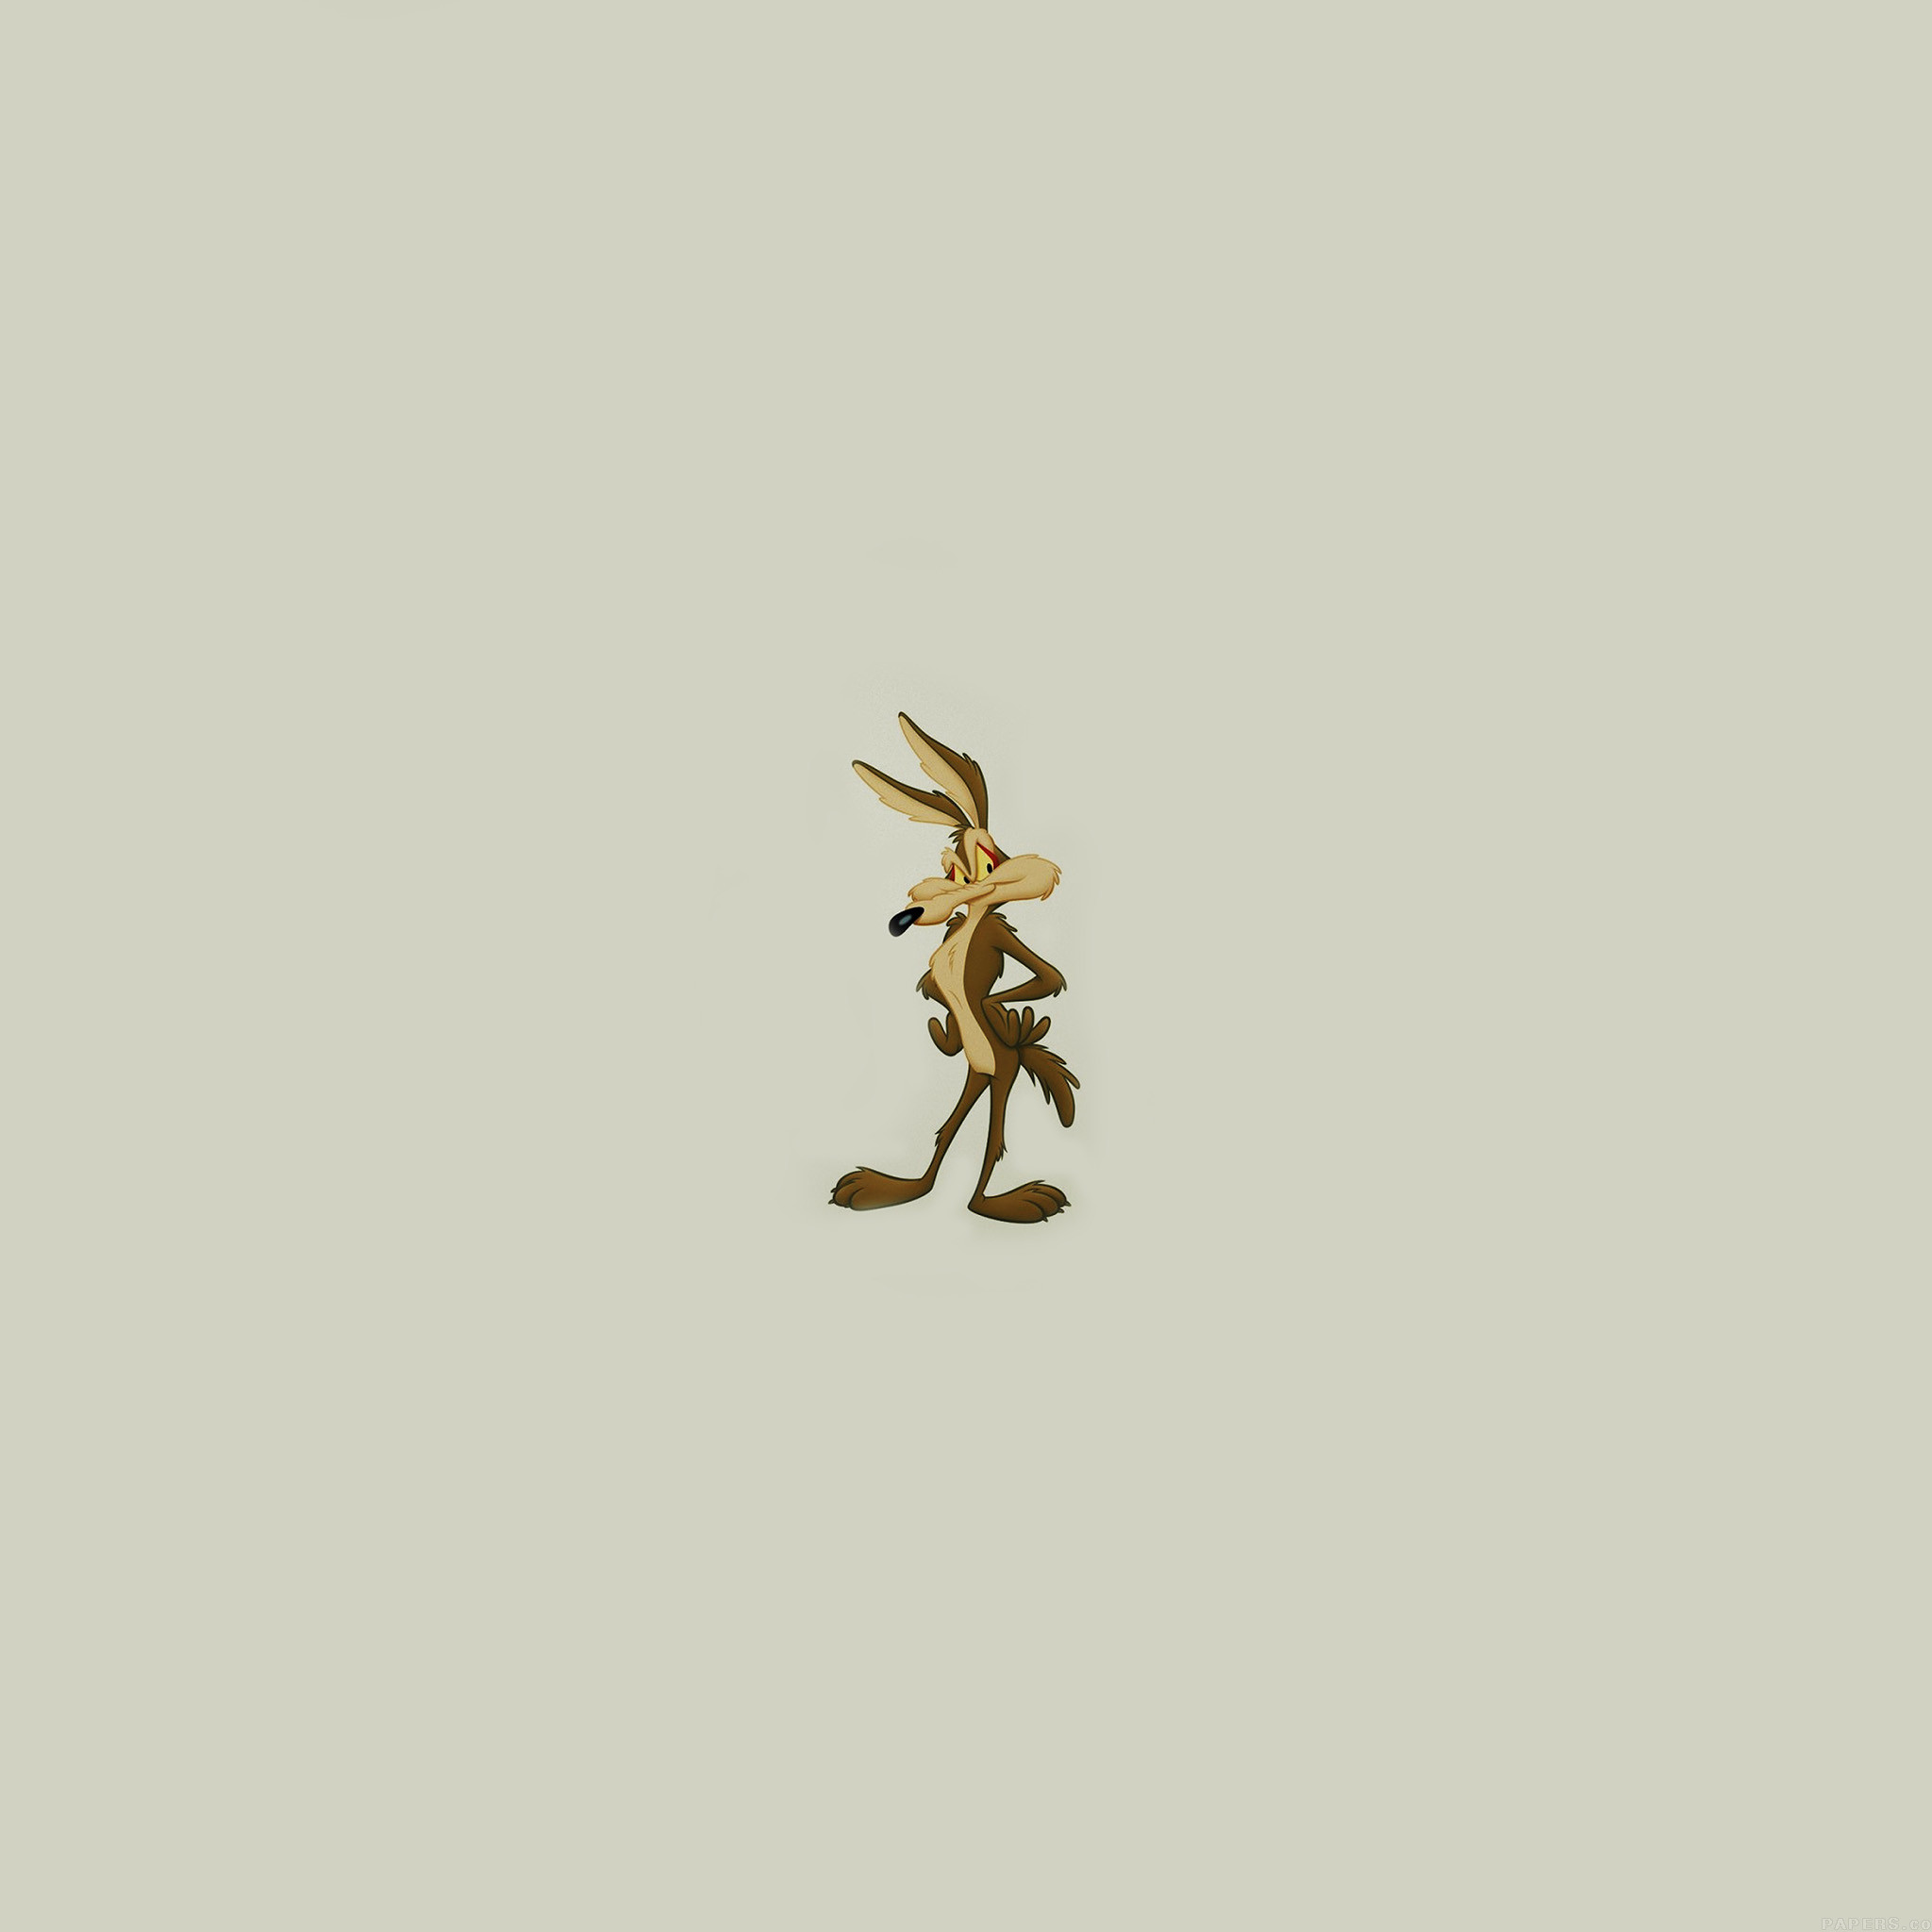 2048x2048 ... Wile E Coyote In Road Runner Illust Art Animal iPad Air wallpaper.